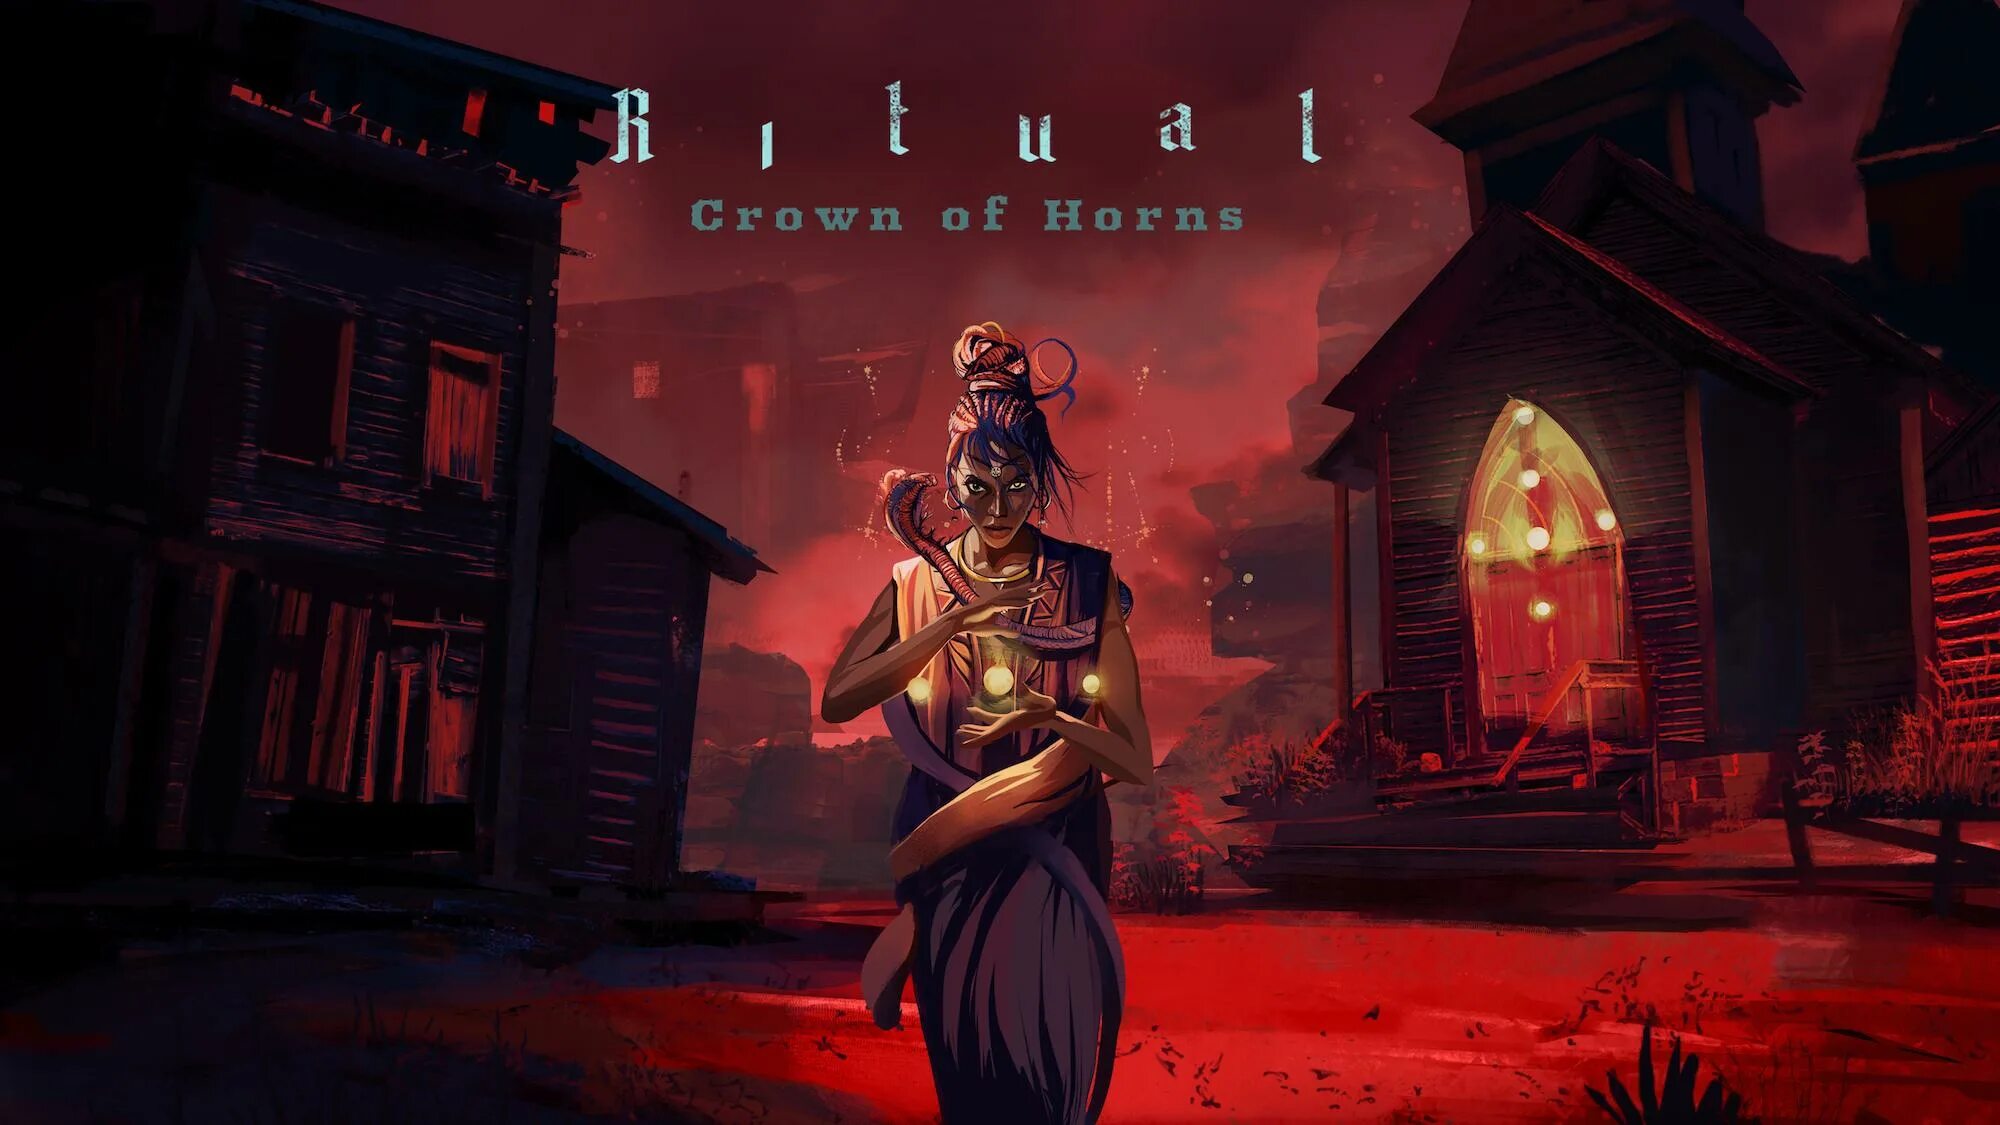 Screwed queen ritual. Ritual Crown. Ritual Crown of Thorns.